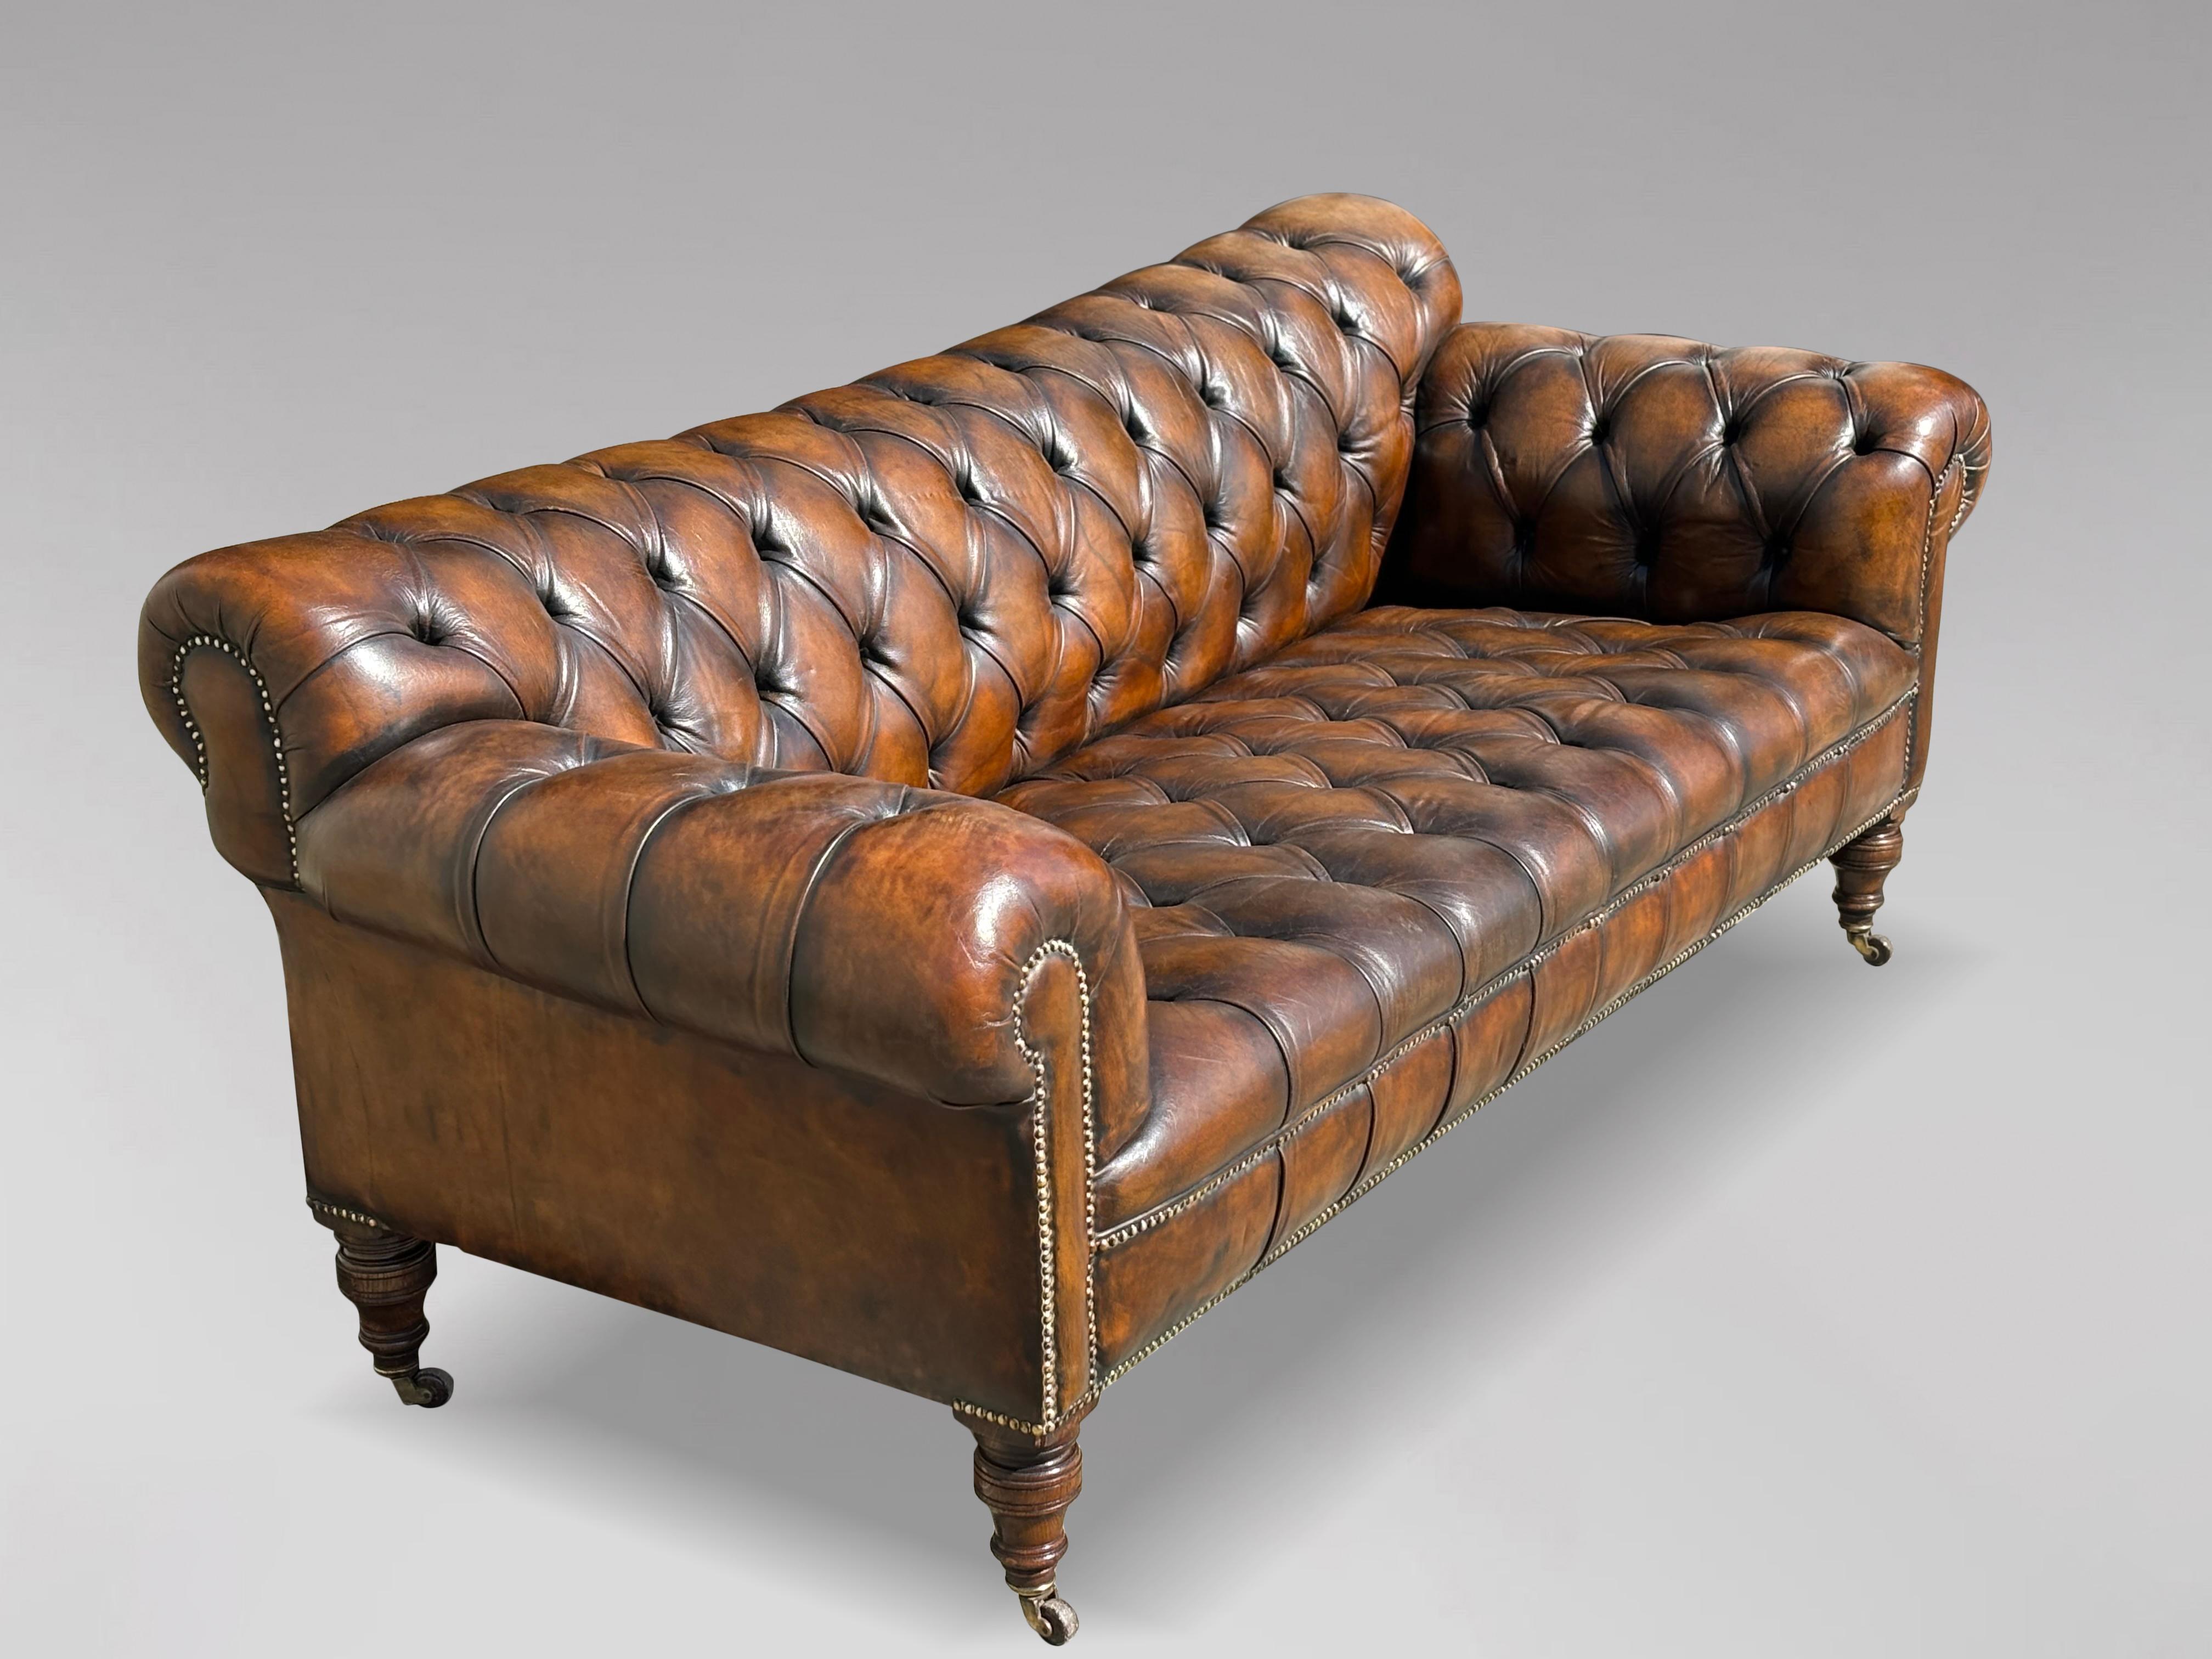 British 19th Century, Victorian Period Leather Chesterfield